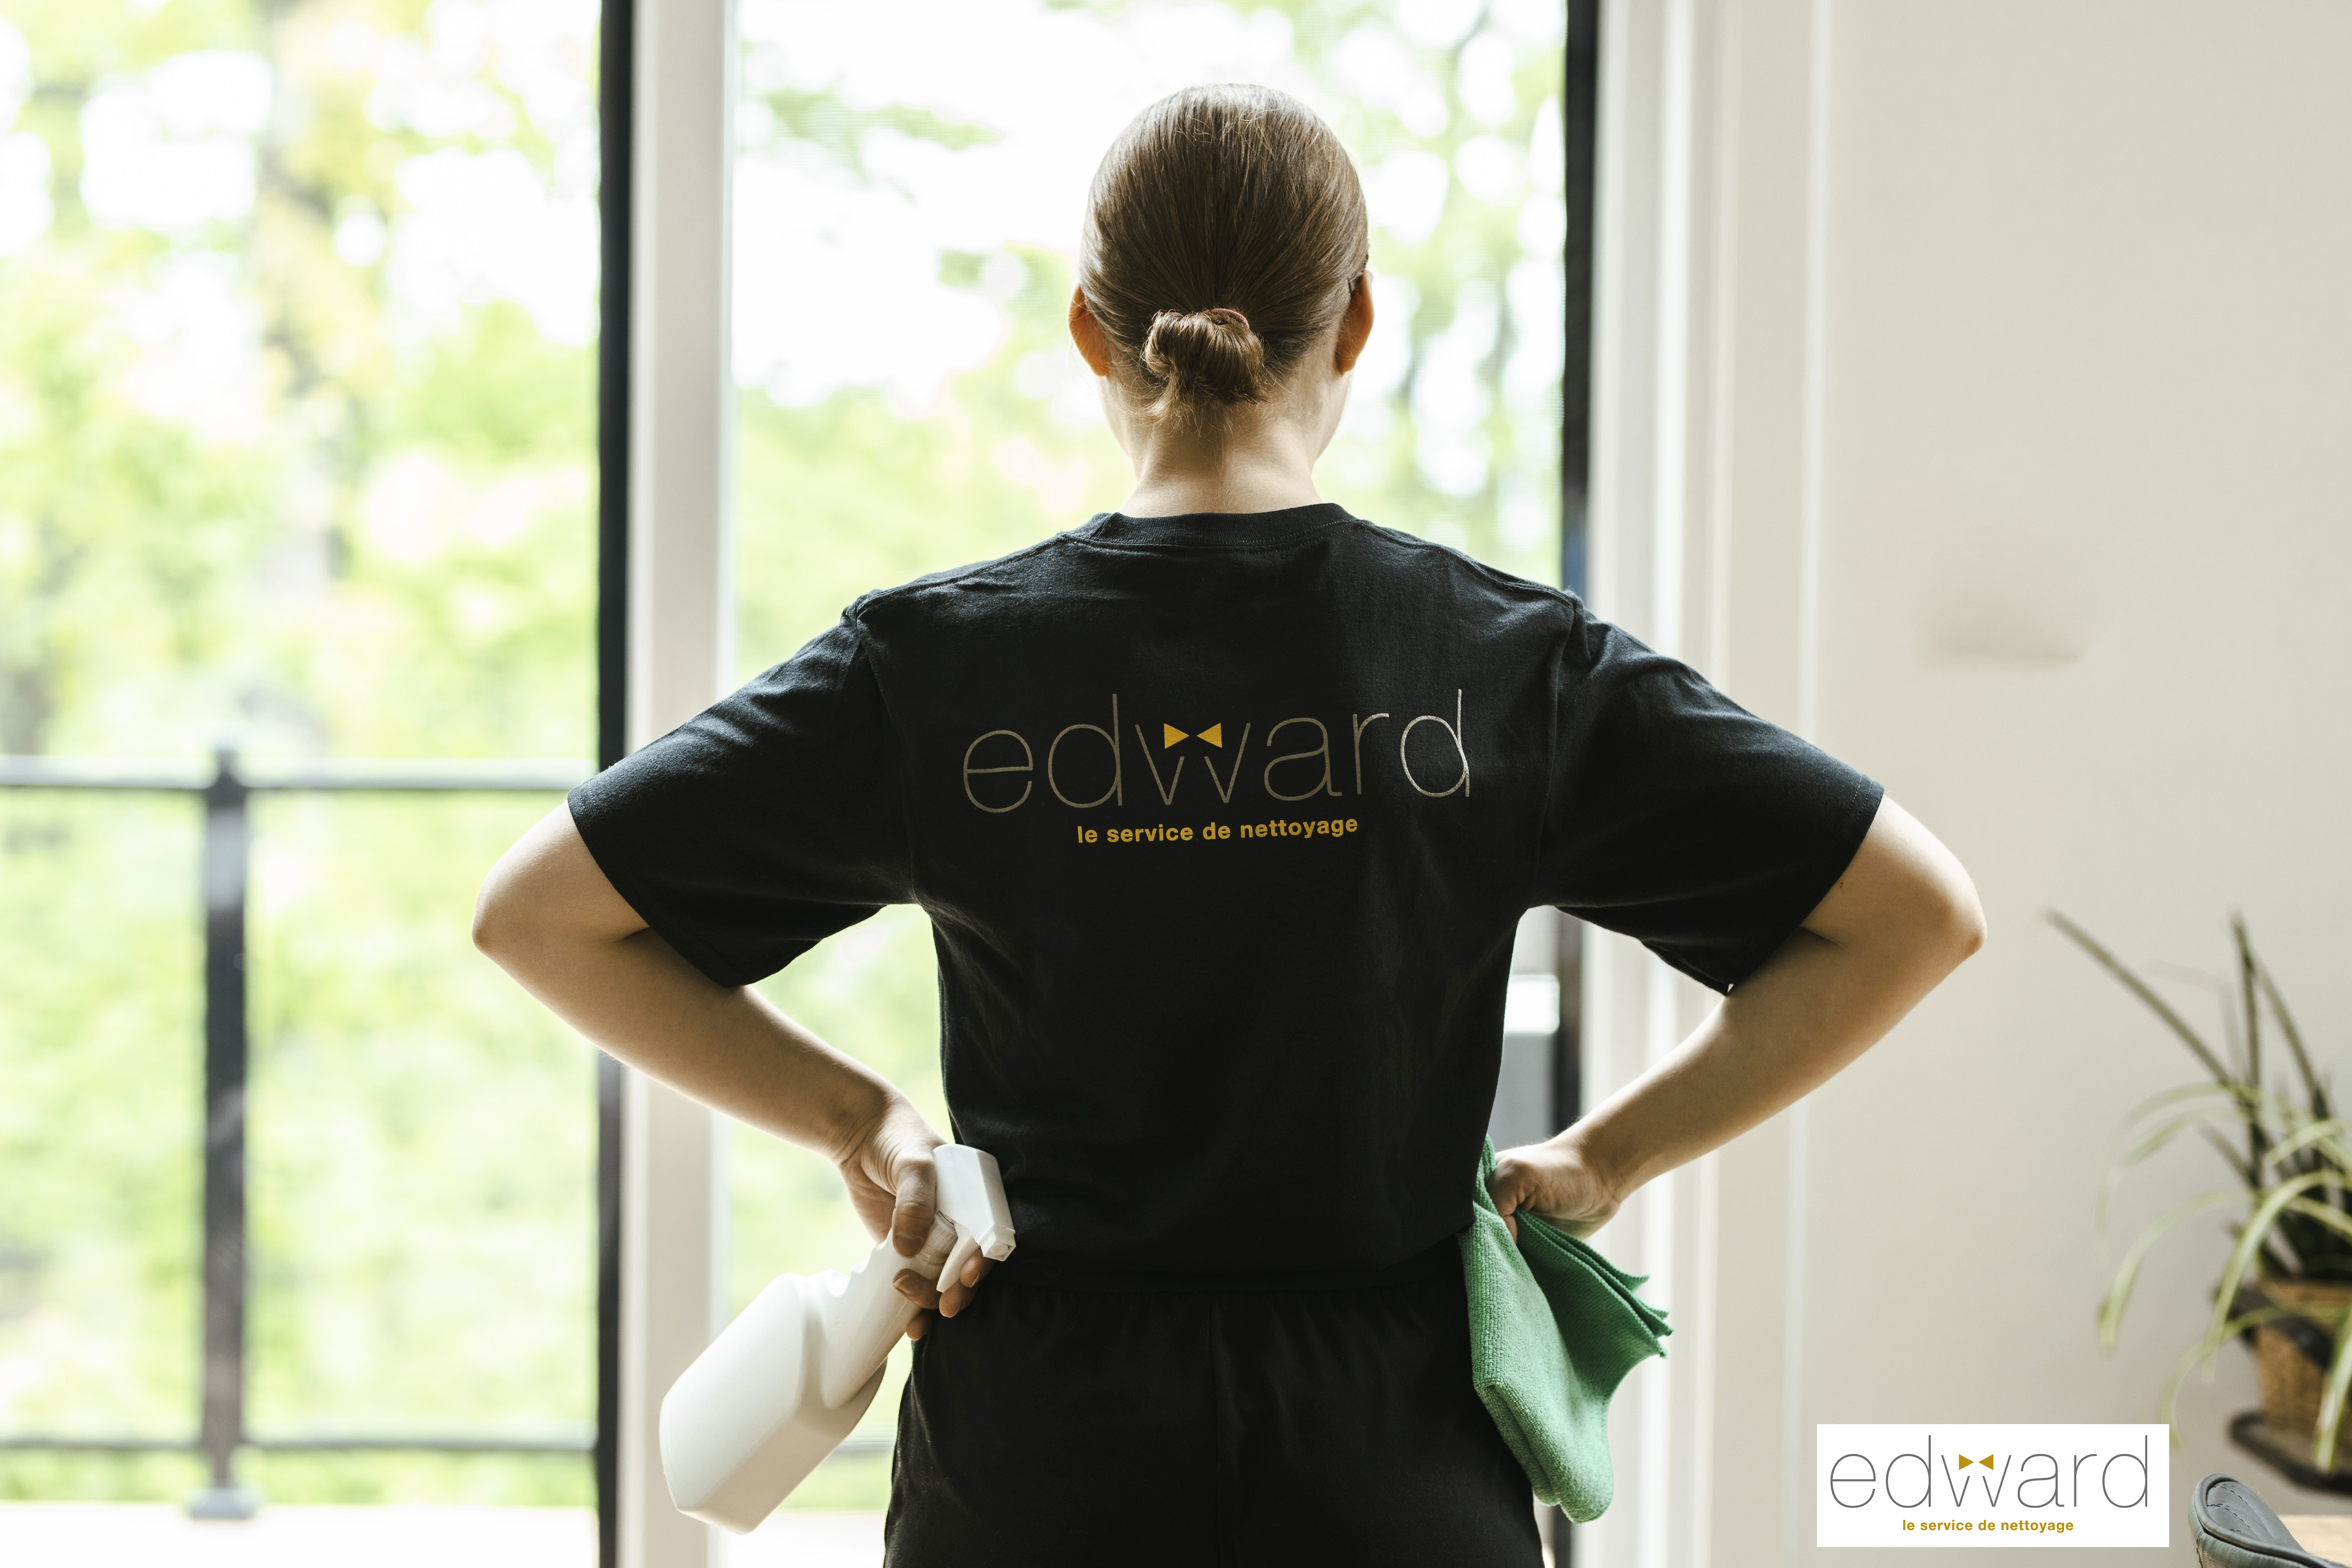 Edward Services